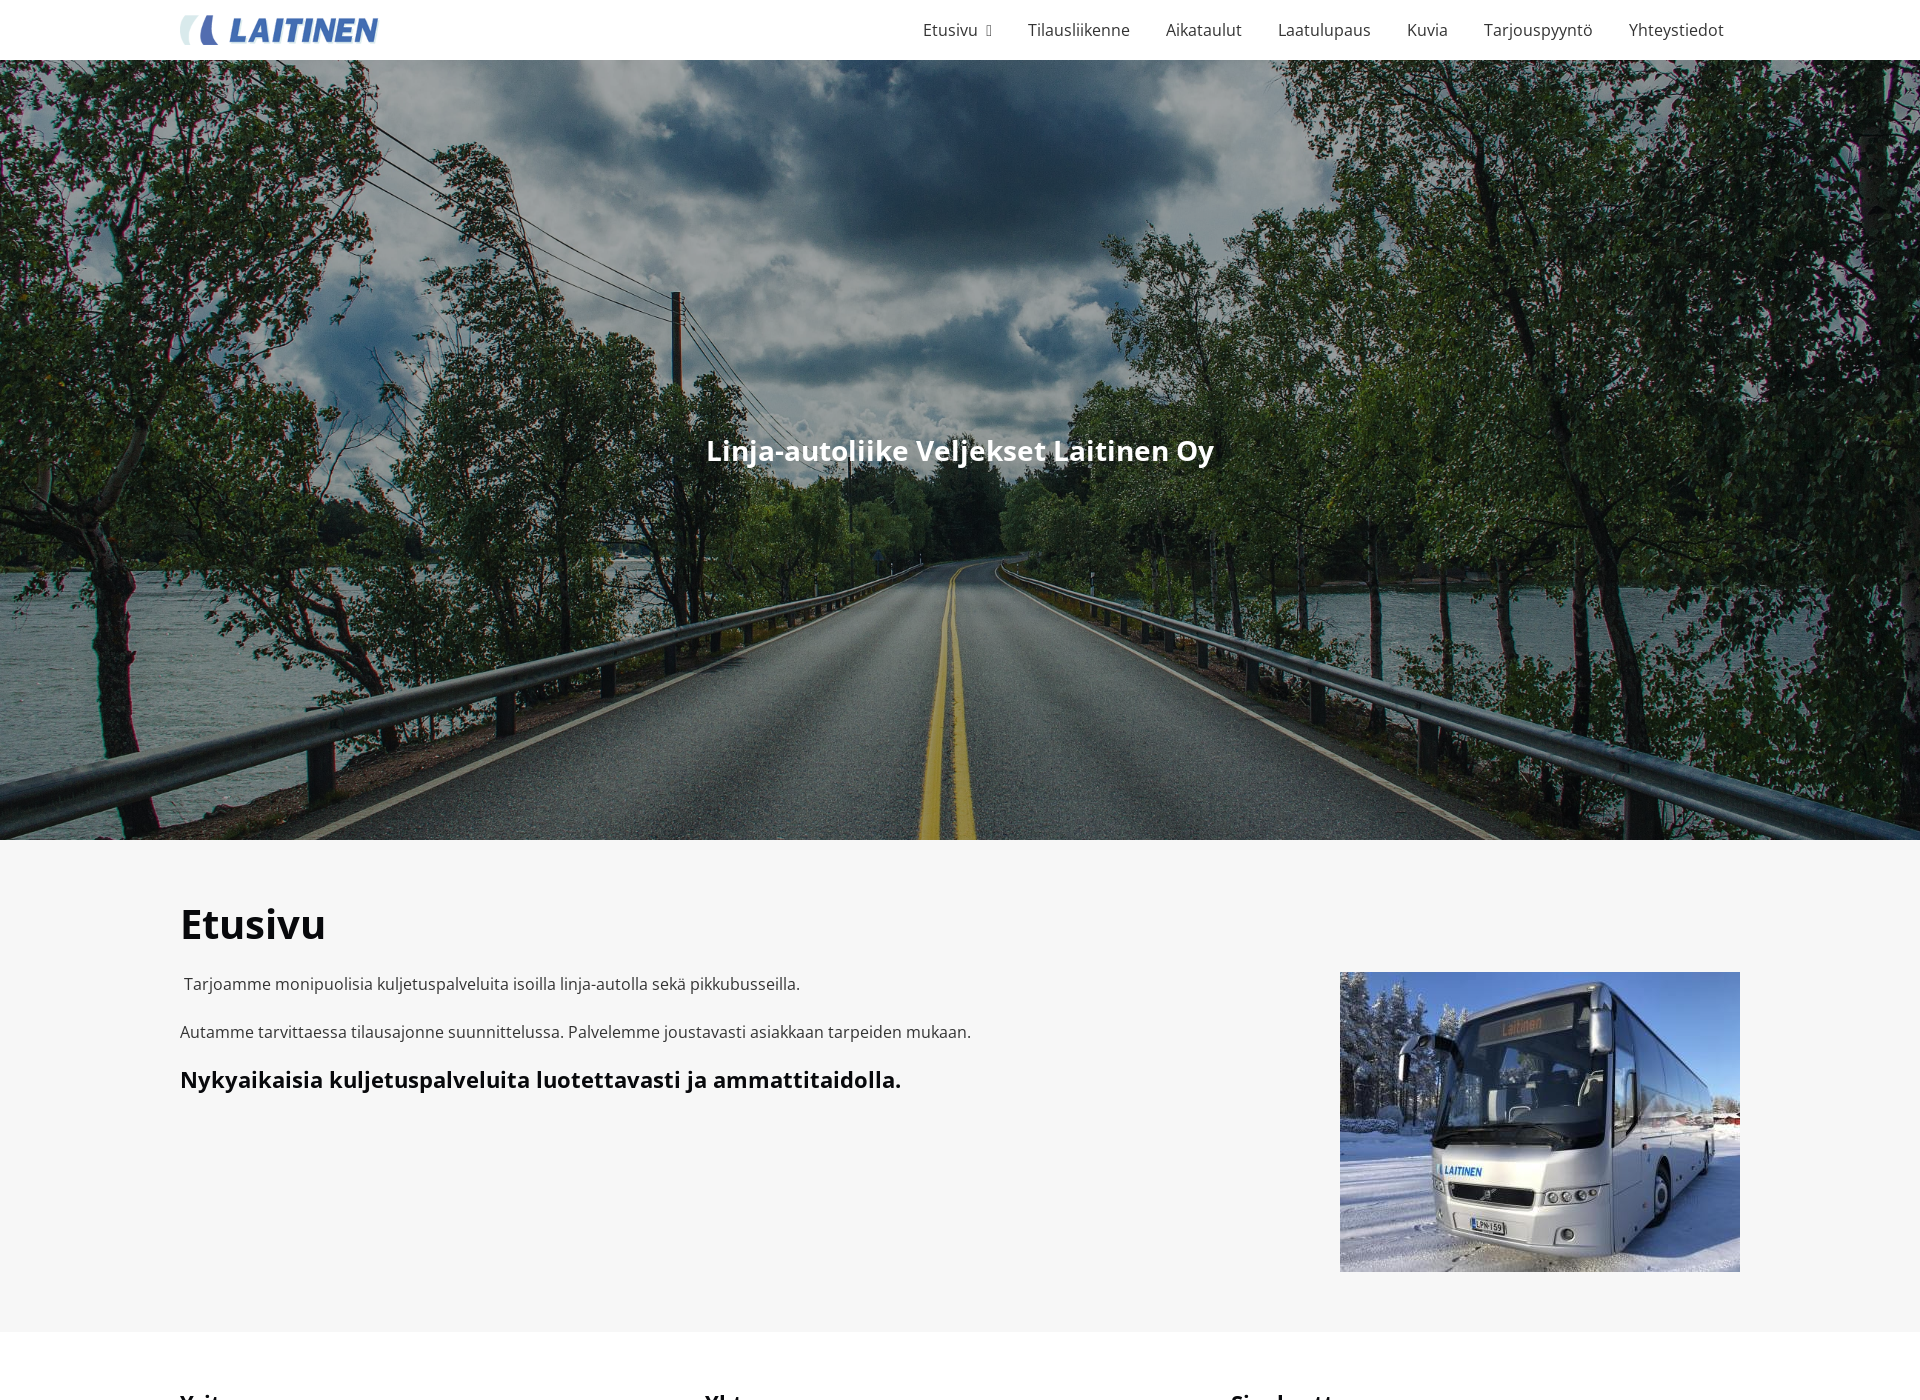 Screenshot for linja-autoliikelaitinen.fi